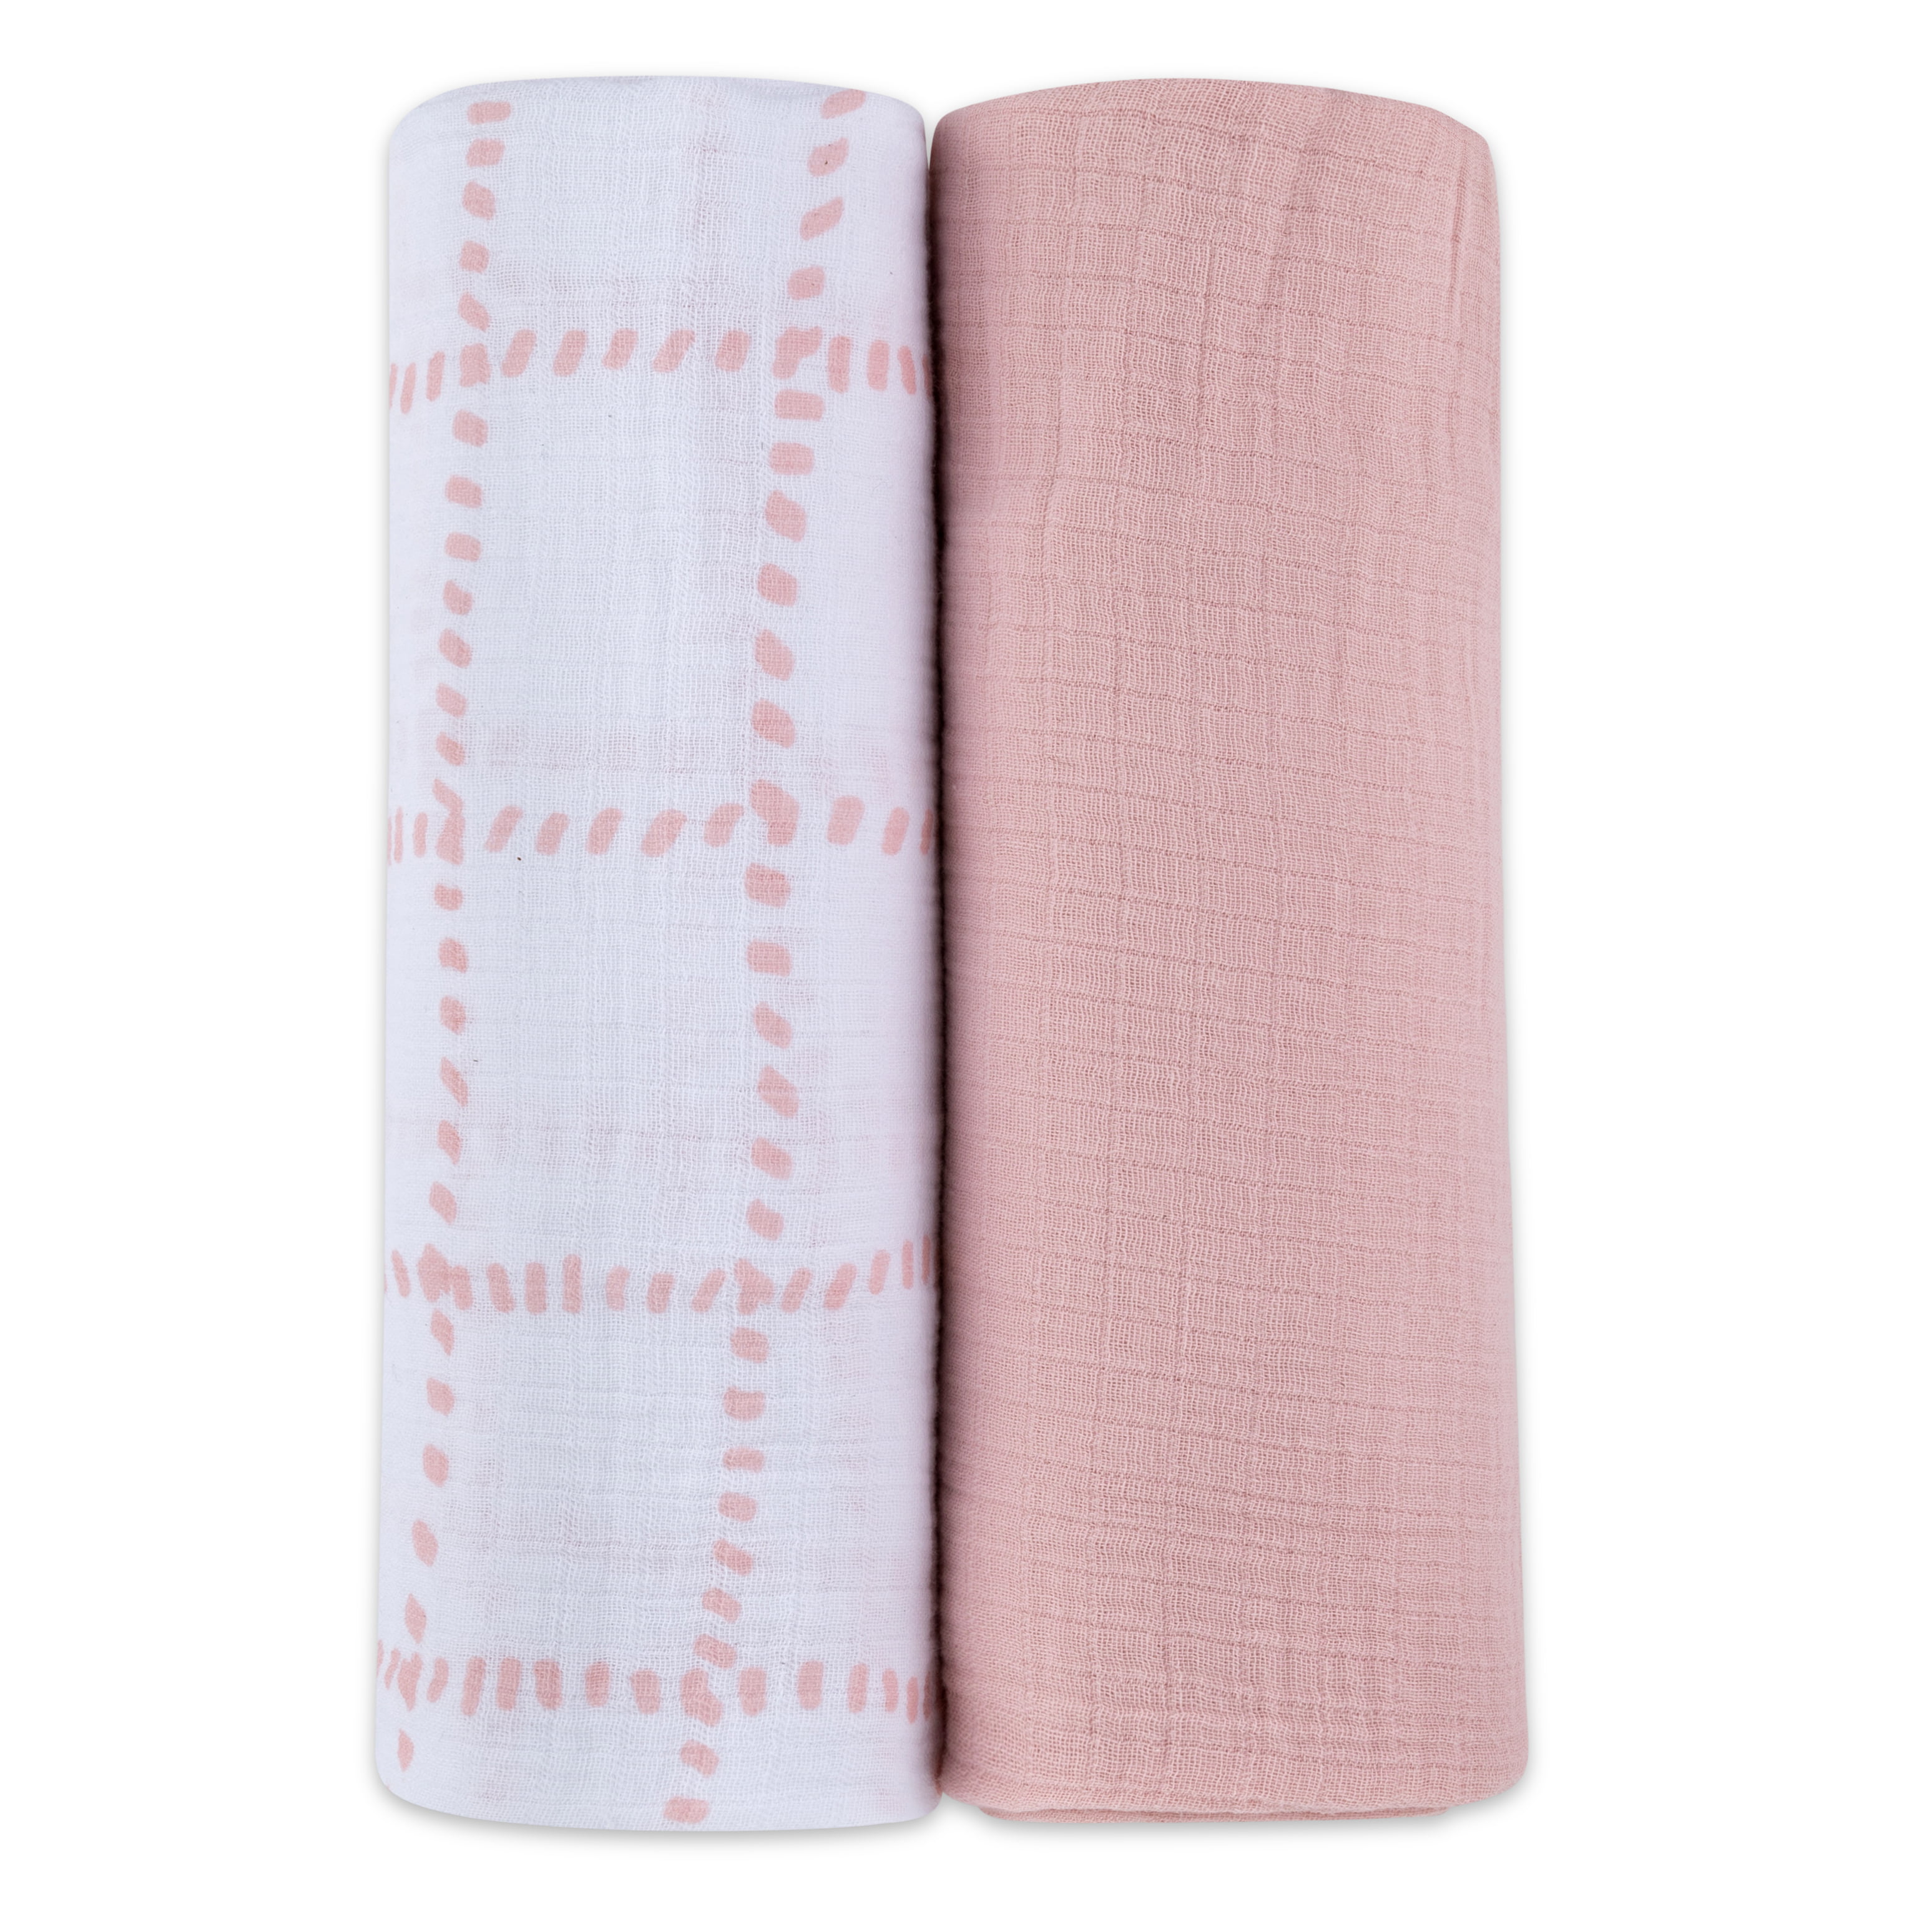 120×120cm Cotton Infant Swaddle Blanket Baby Sleeping Muslin Wrap Nursing Cover 